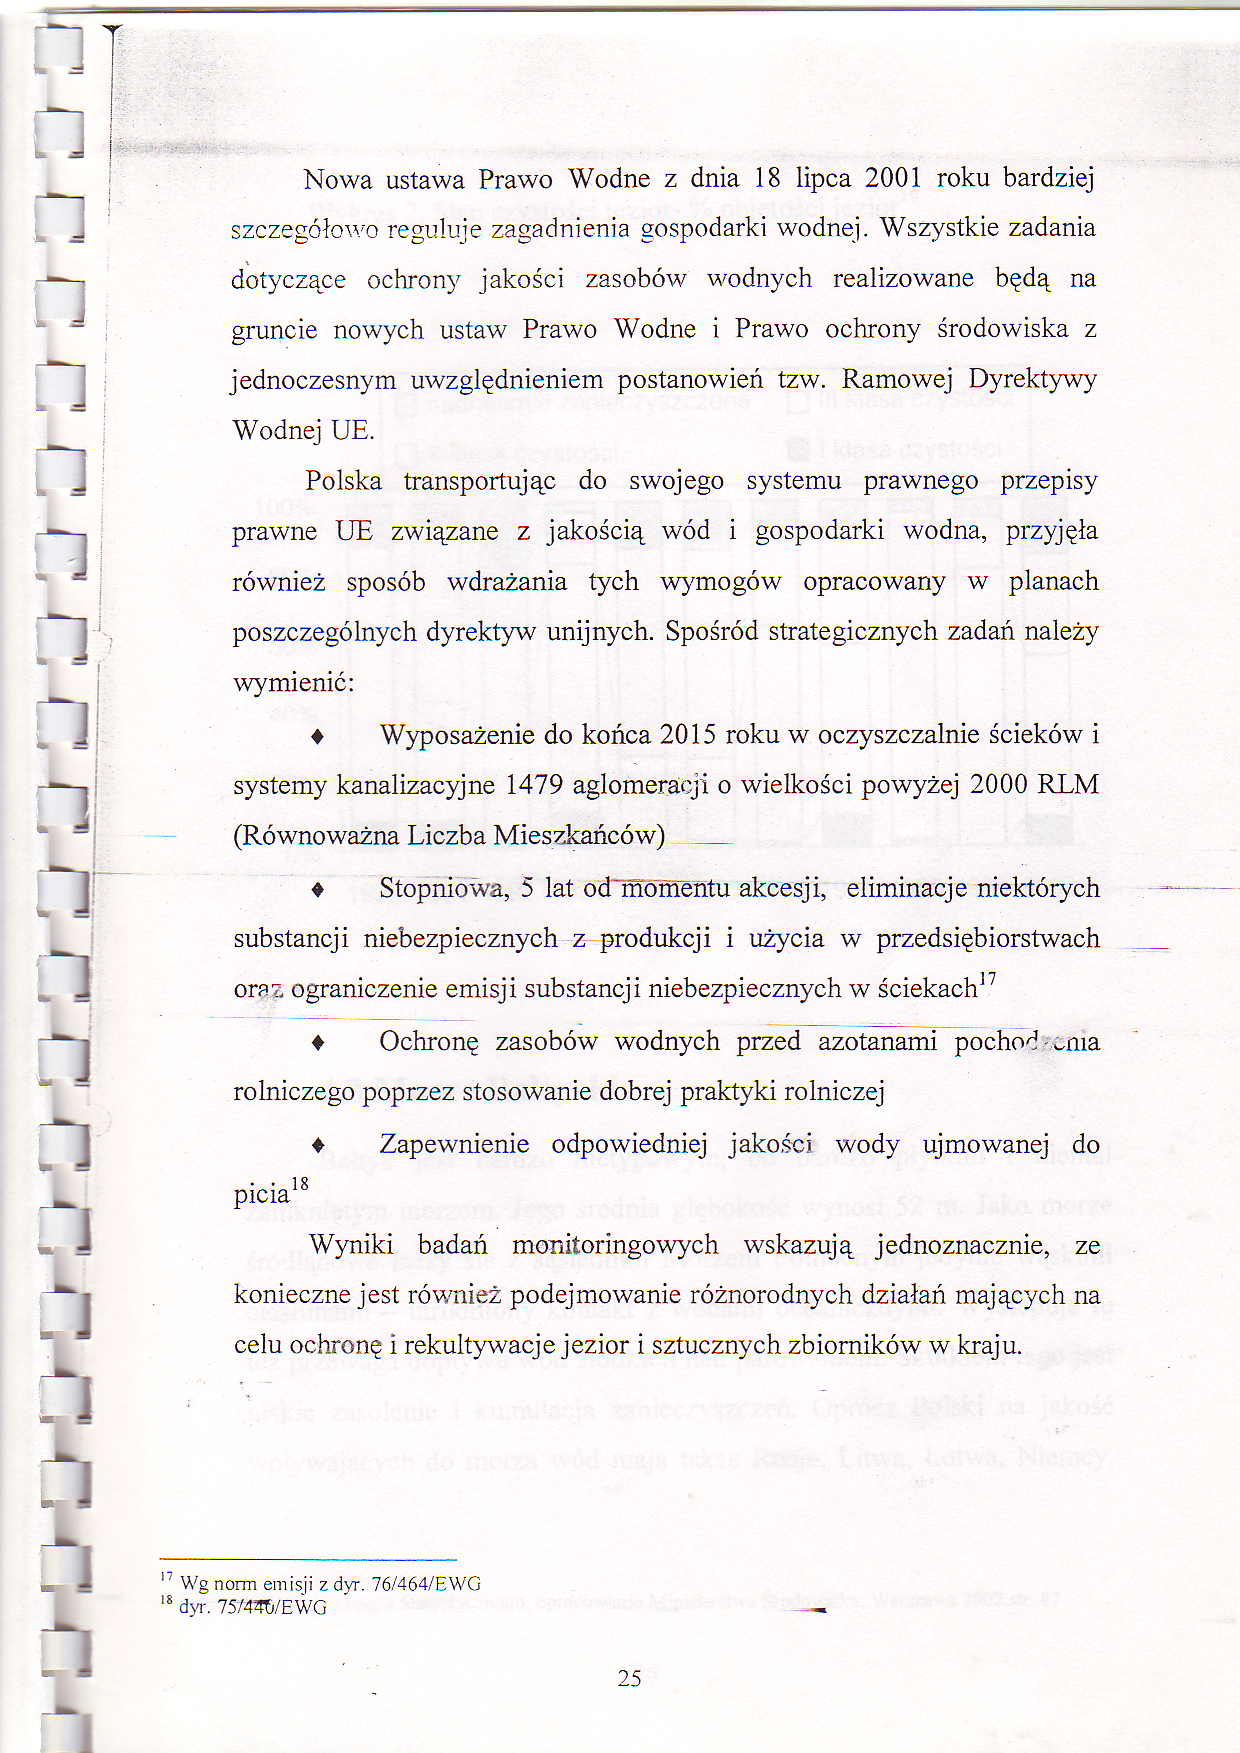 ekologia głęboka - 20033.BMP